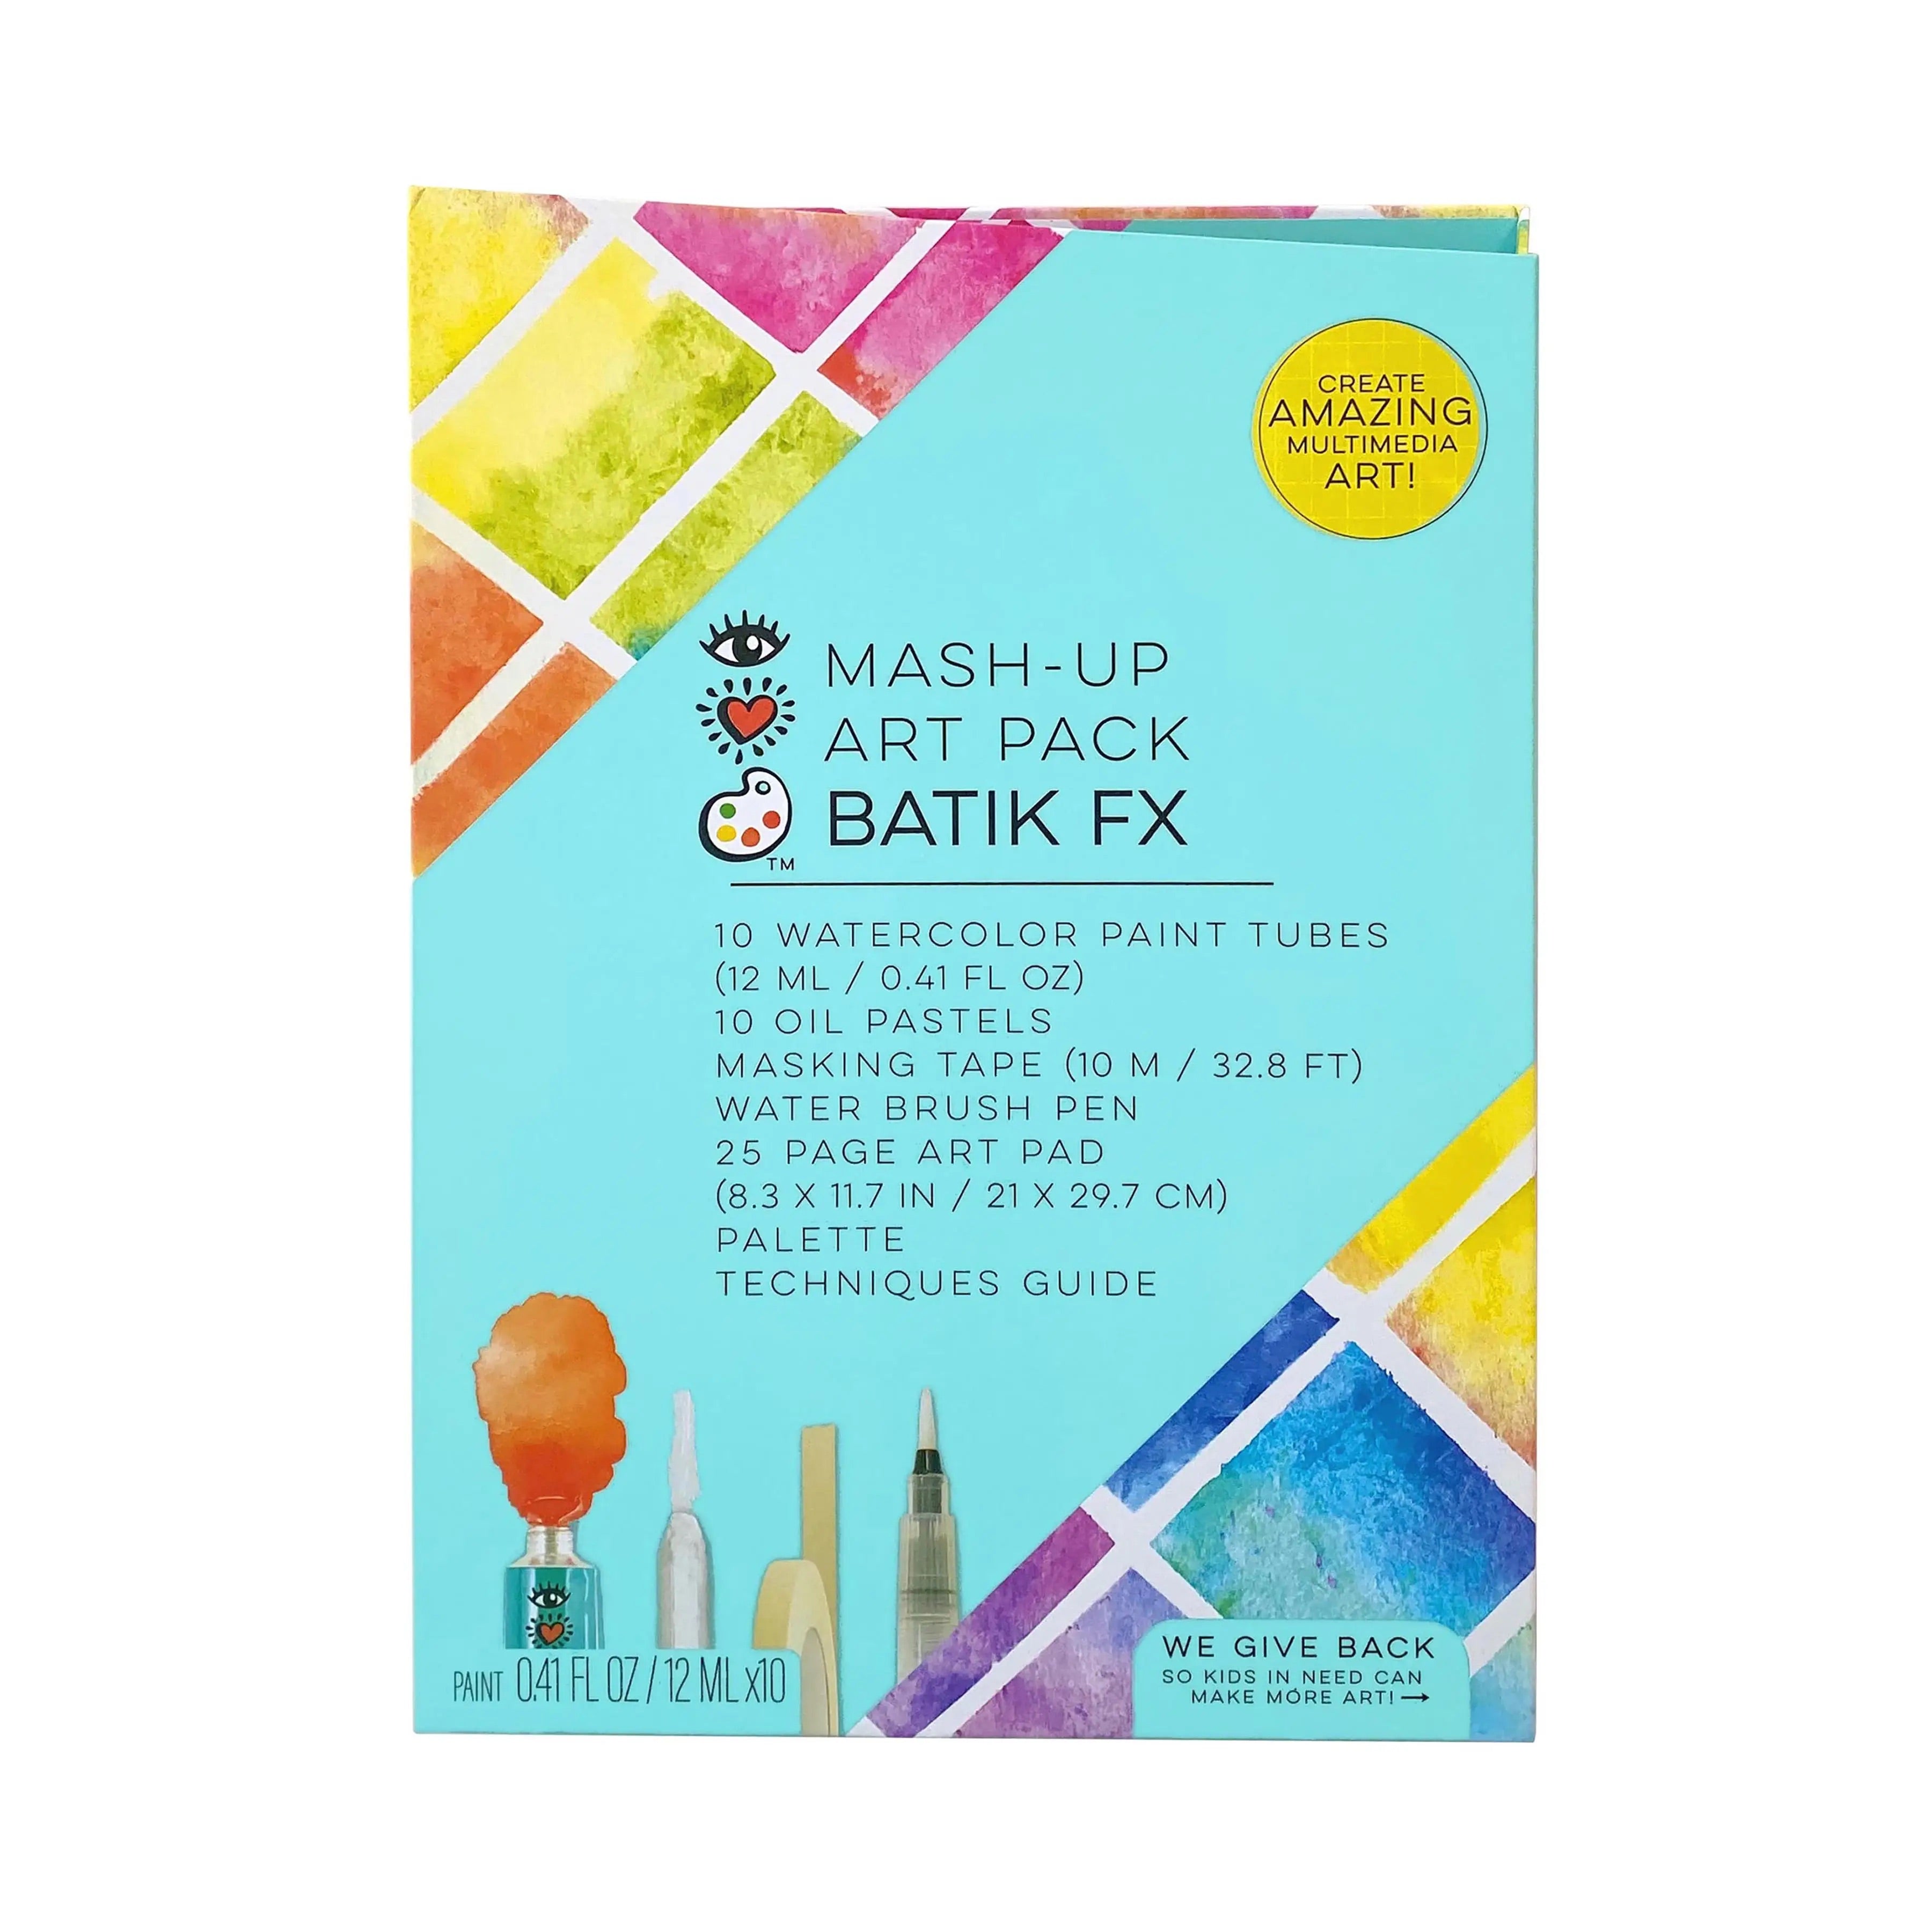 Mash-Up Art Pack Batik FX by Bright Stripes